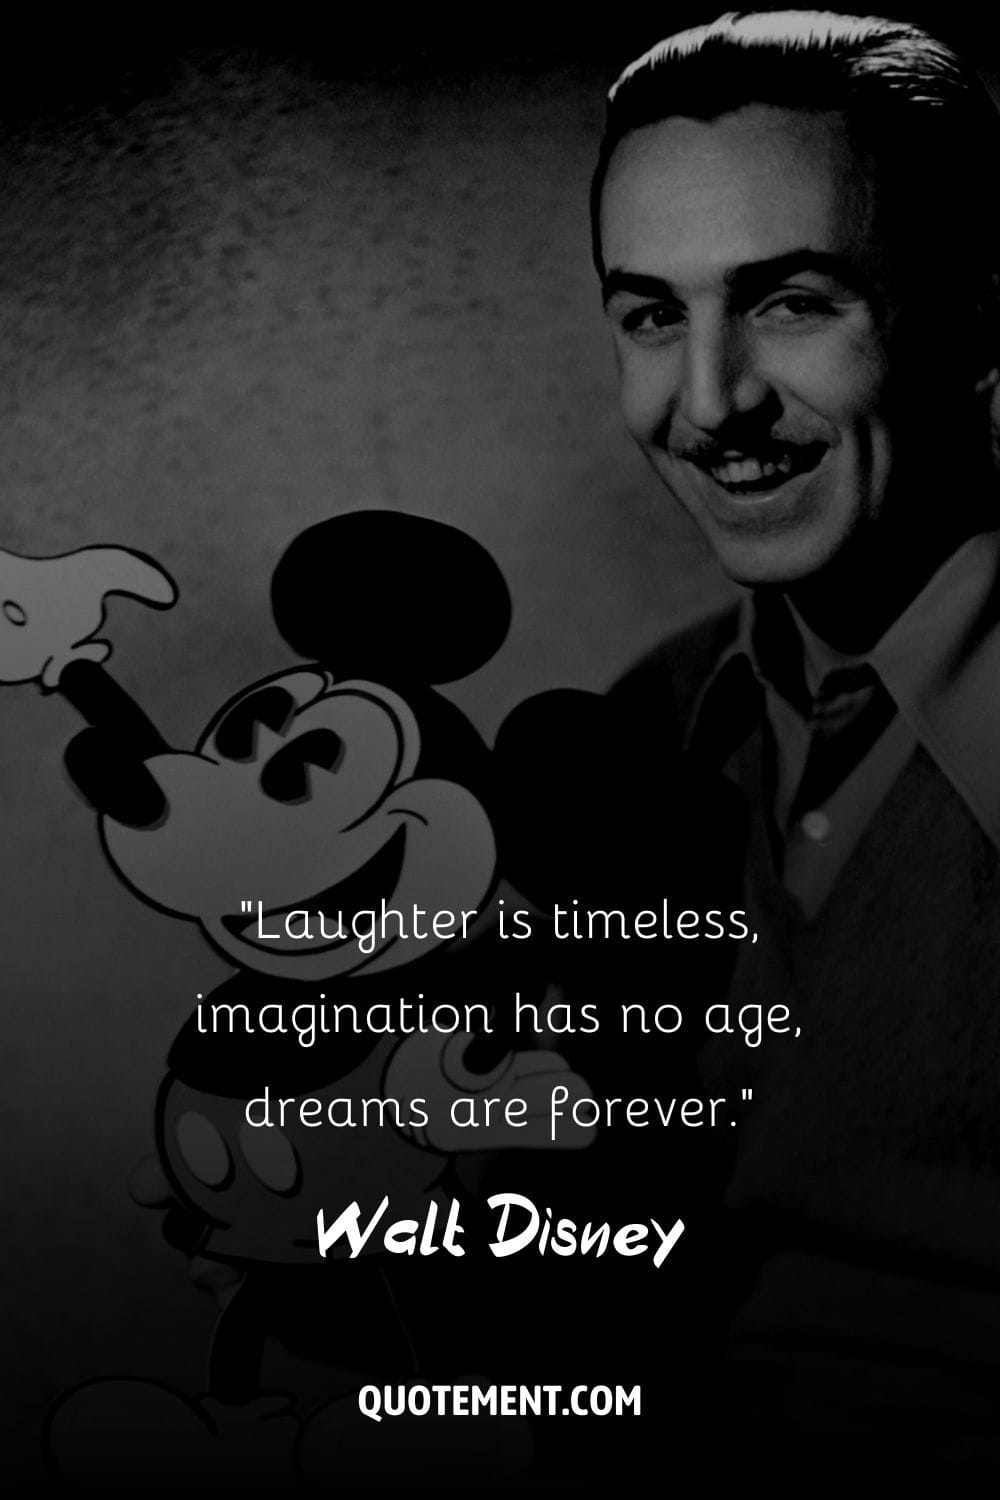 Walt Disney shares a joyful moment with Mickey.